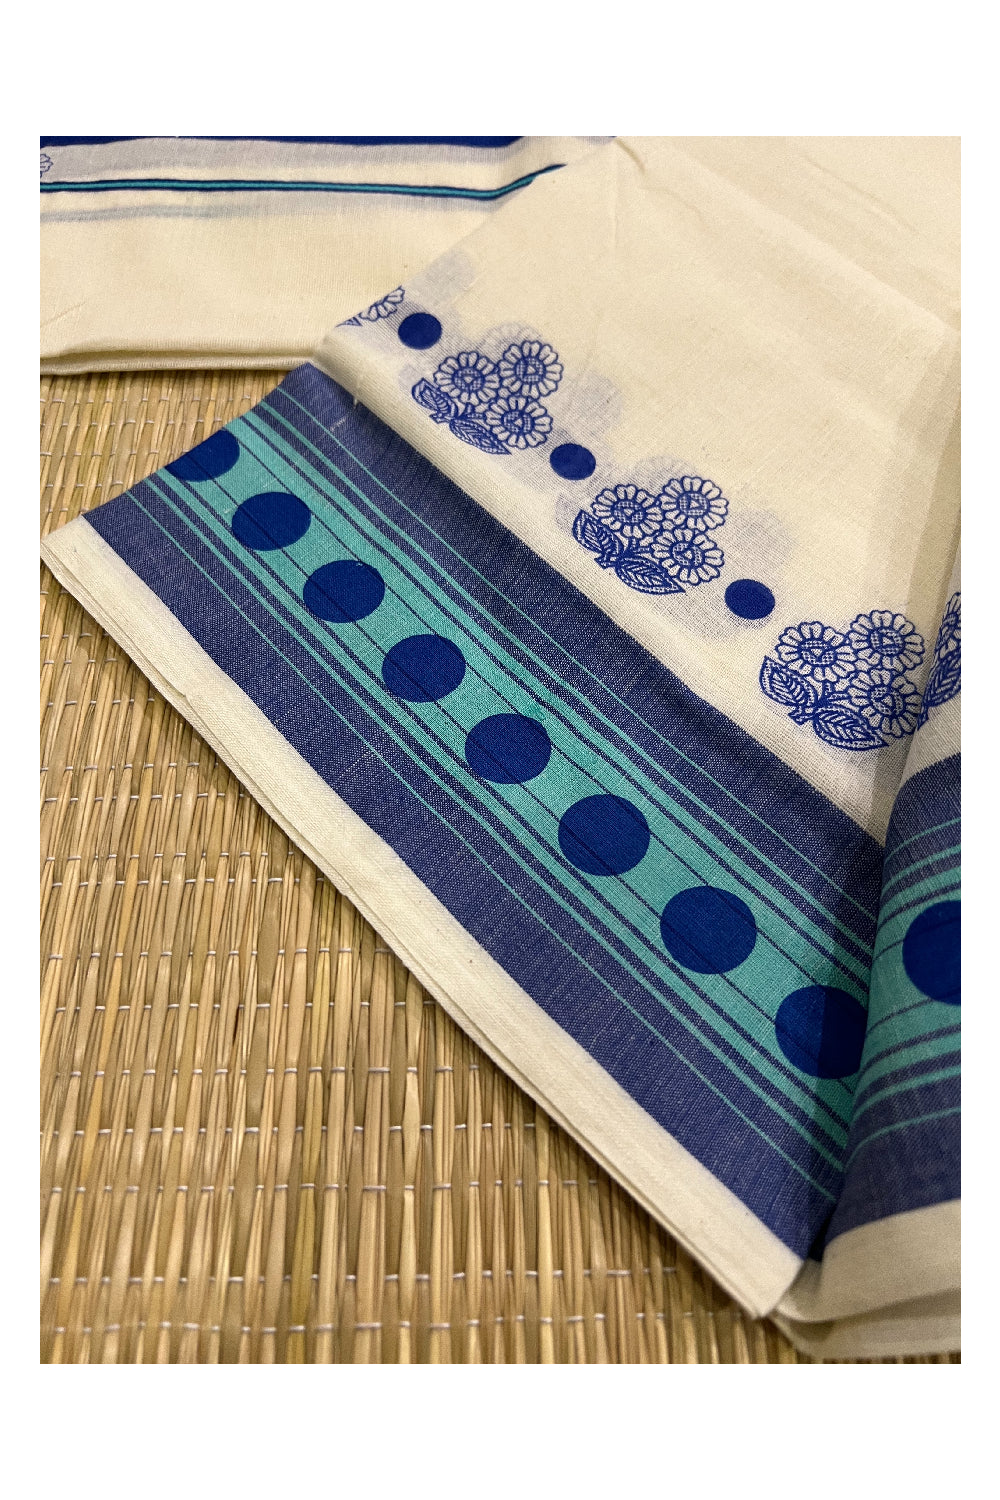 Kerala Cotton Set Mundu (Mundum Neriyathum) with Floral Block Prints on Blue and Turquoise Border